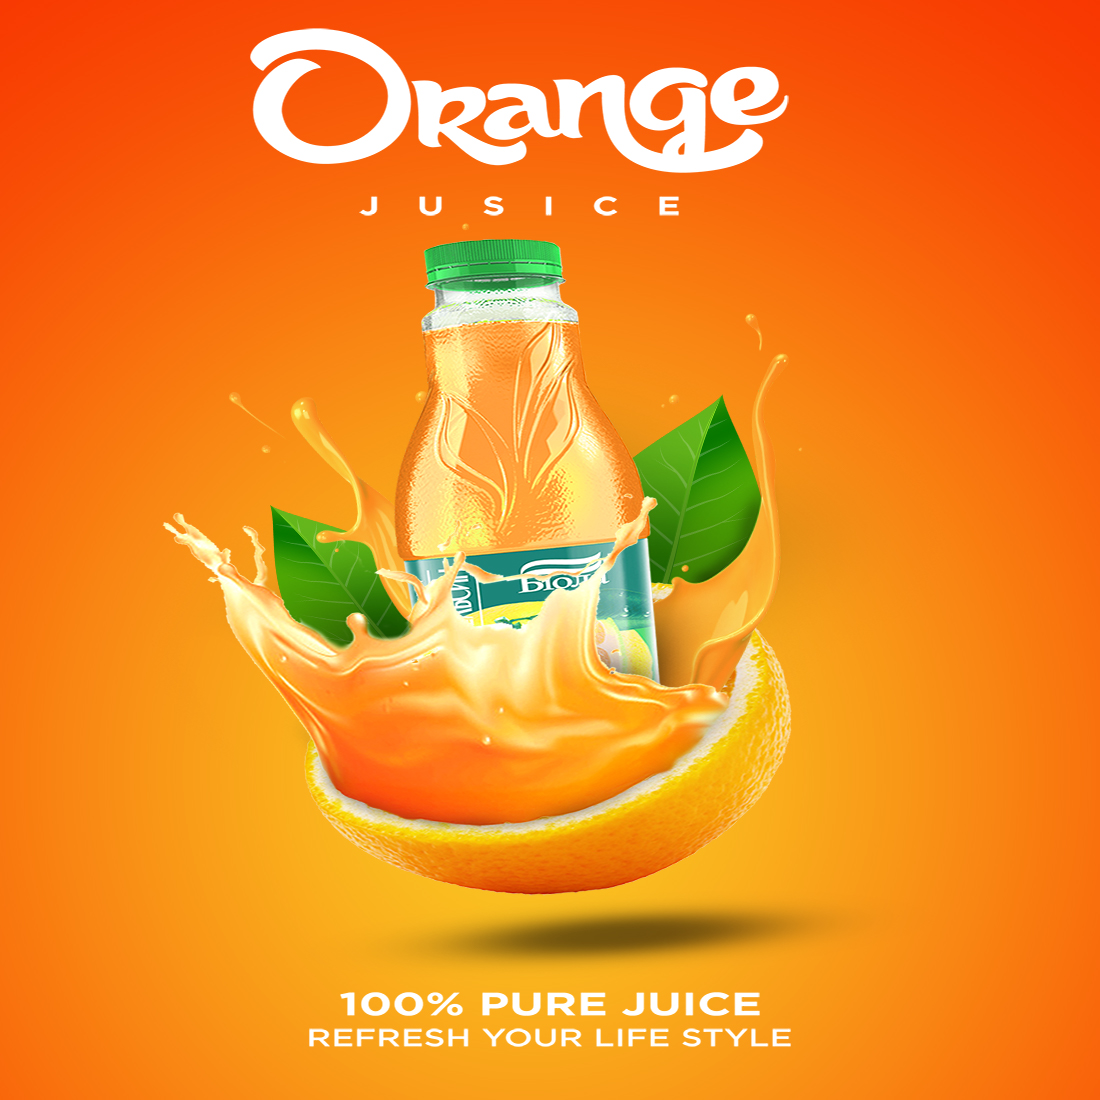 fresh juice poster